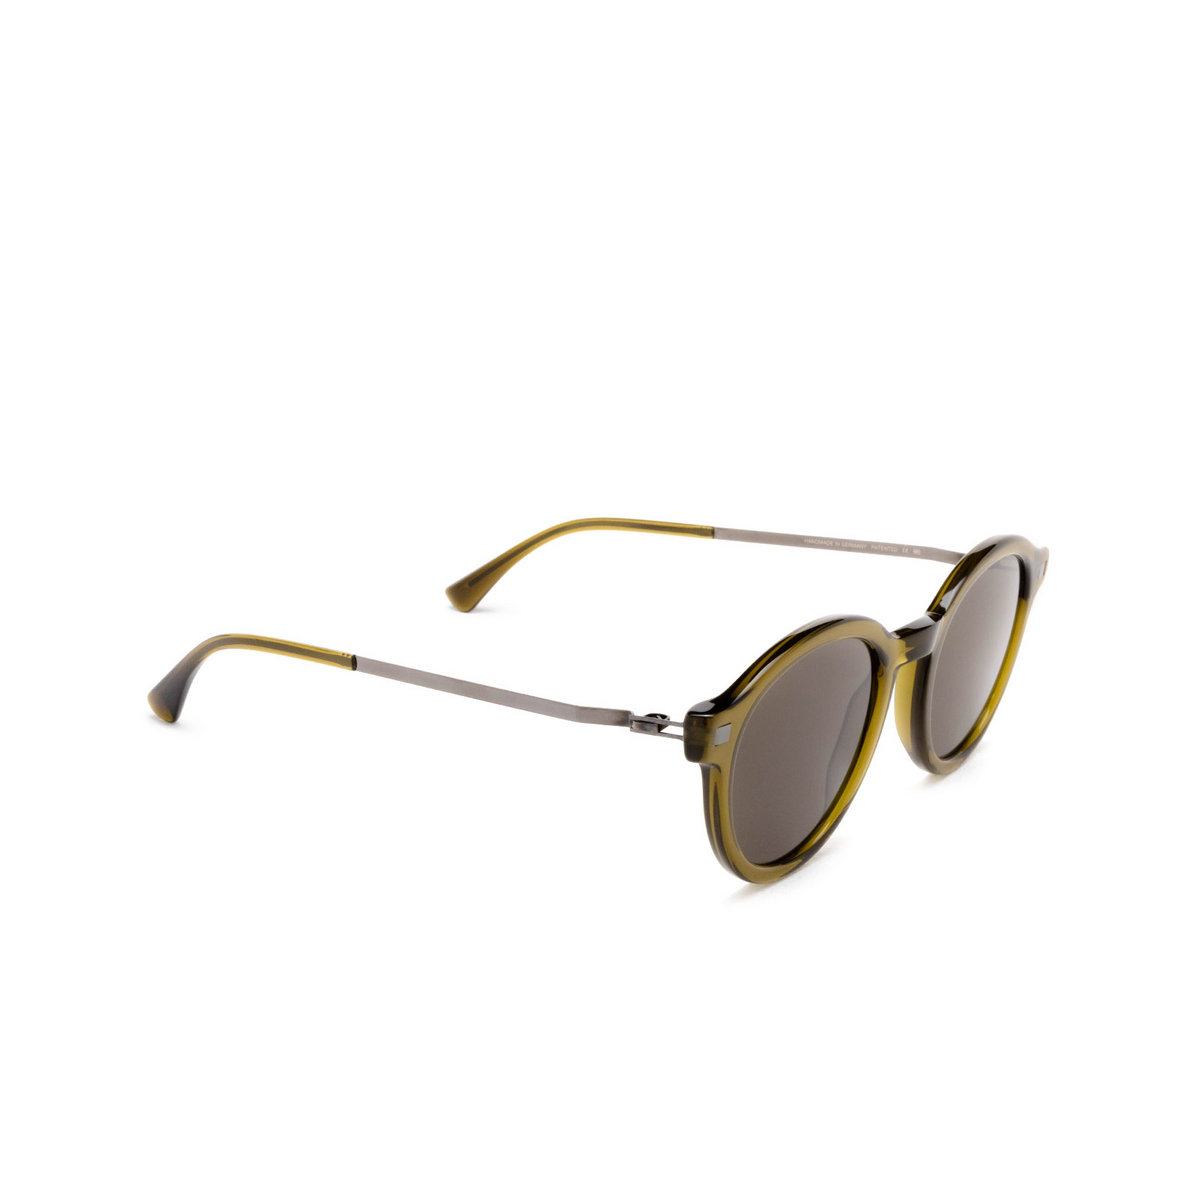 Mykita® Round Sunglasses: Ketill color 723 C114 Peridot/shiny Graphite - three-quarters view